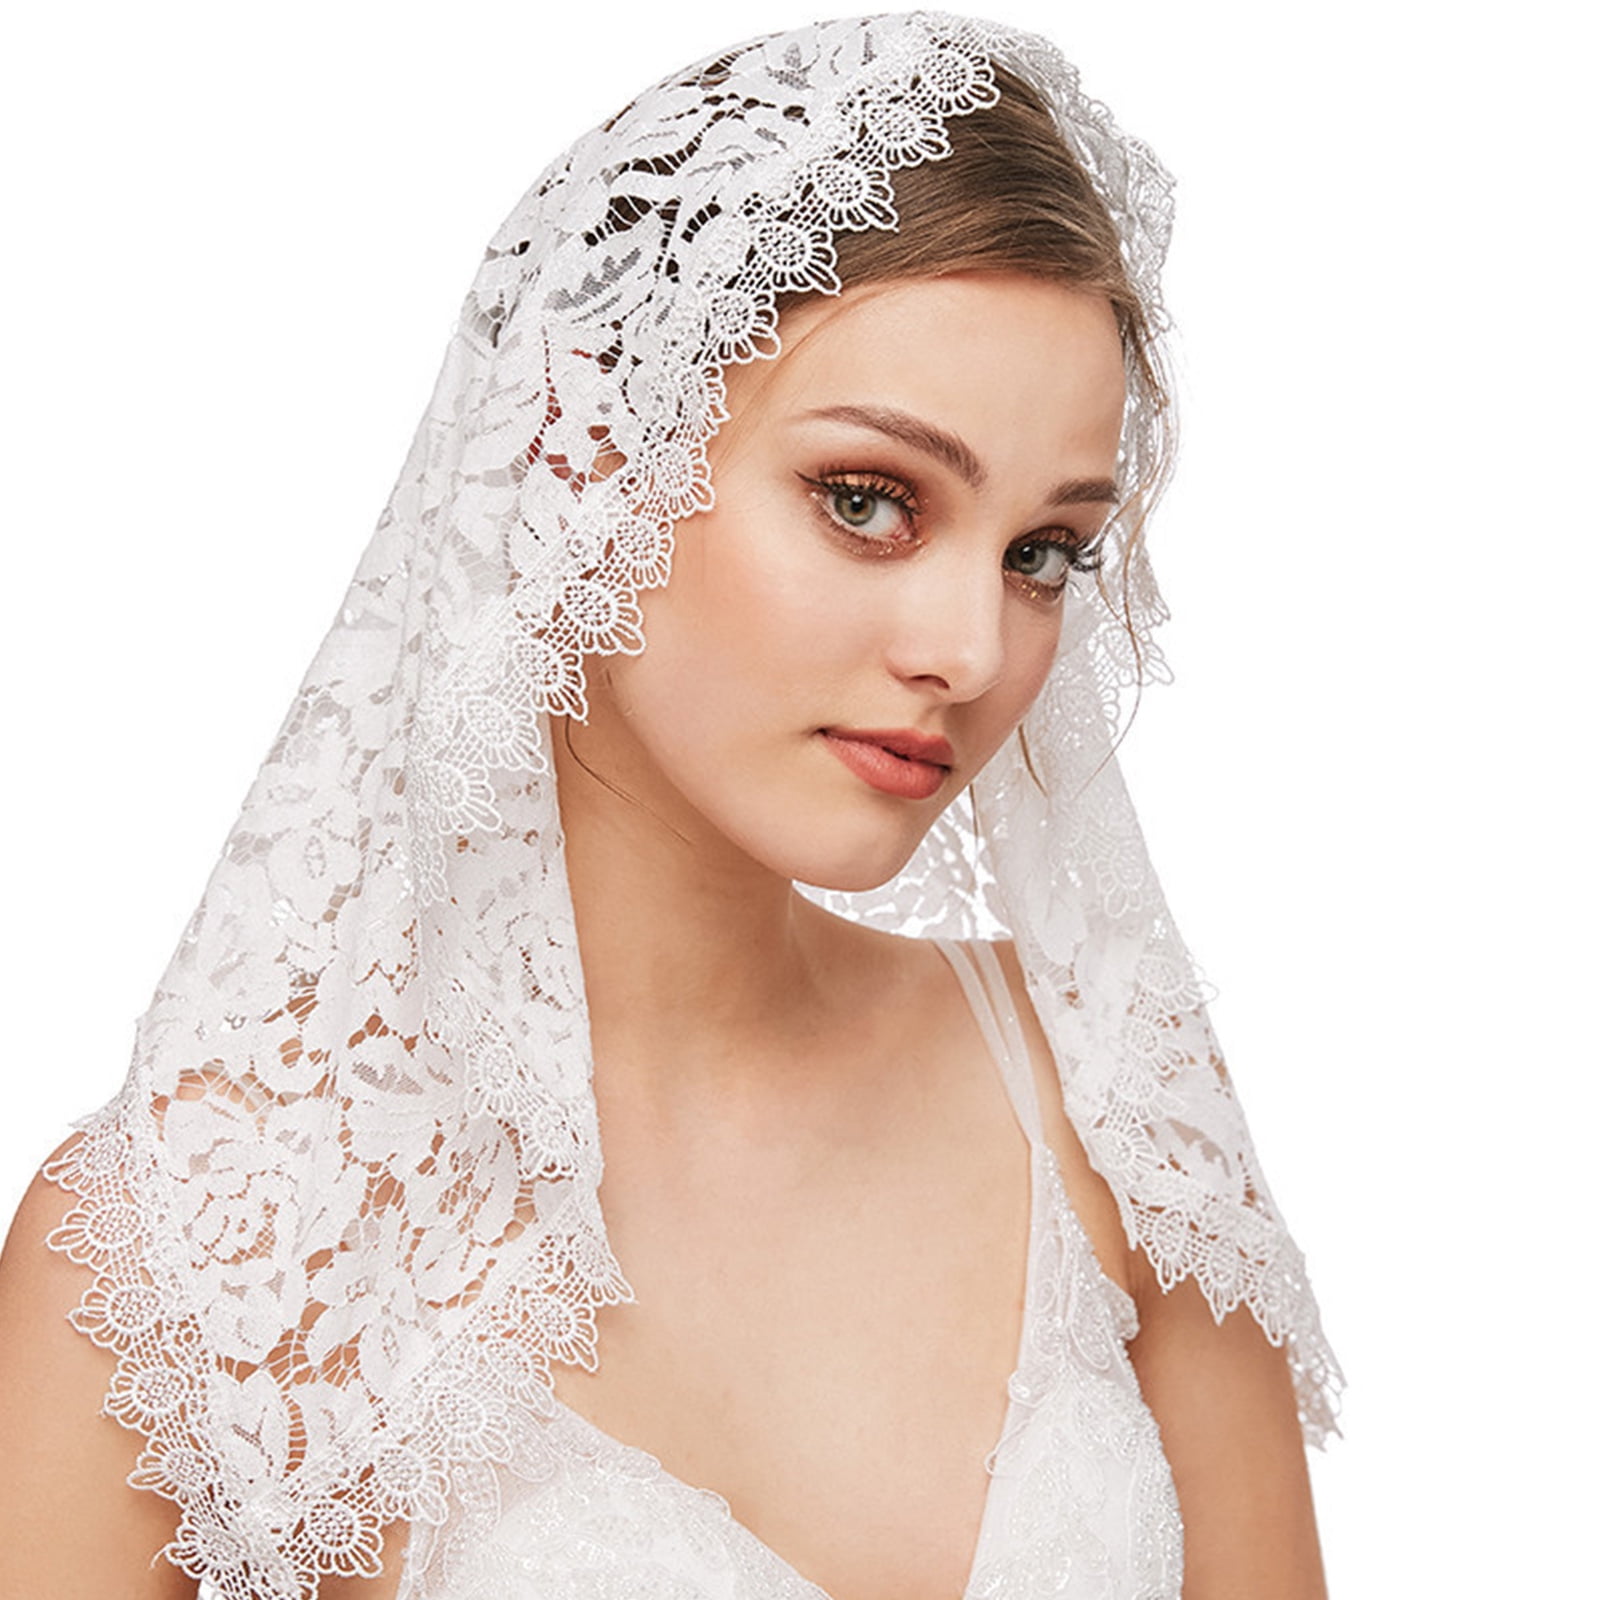 VINOPROM Lace Veils for Church Mantilla Catholic Veil Latin Mass Head Covering White Black Veils for Bridal